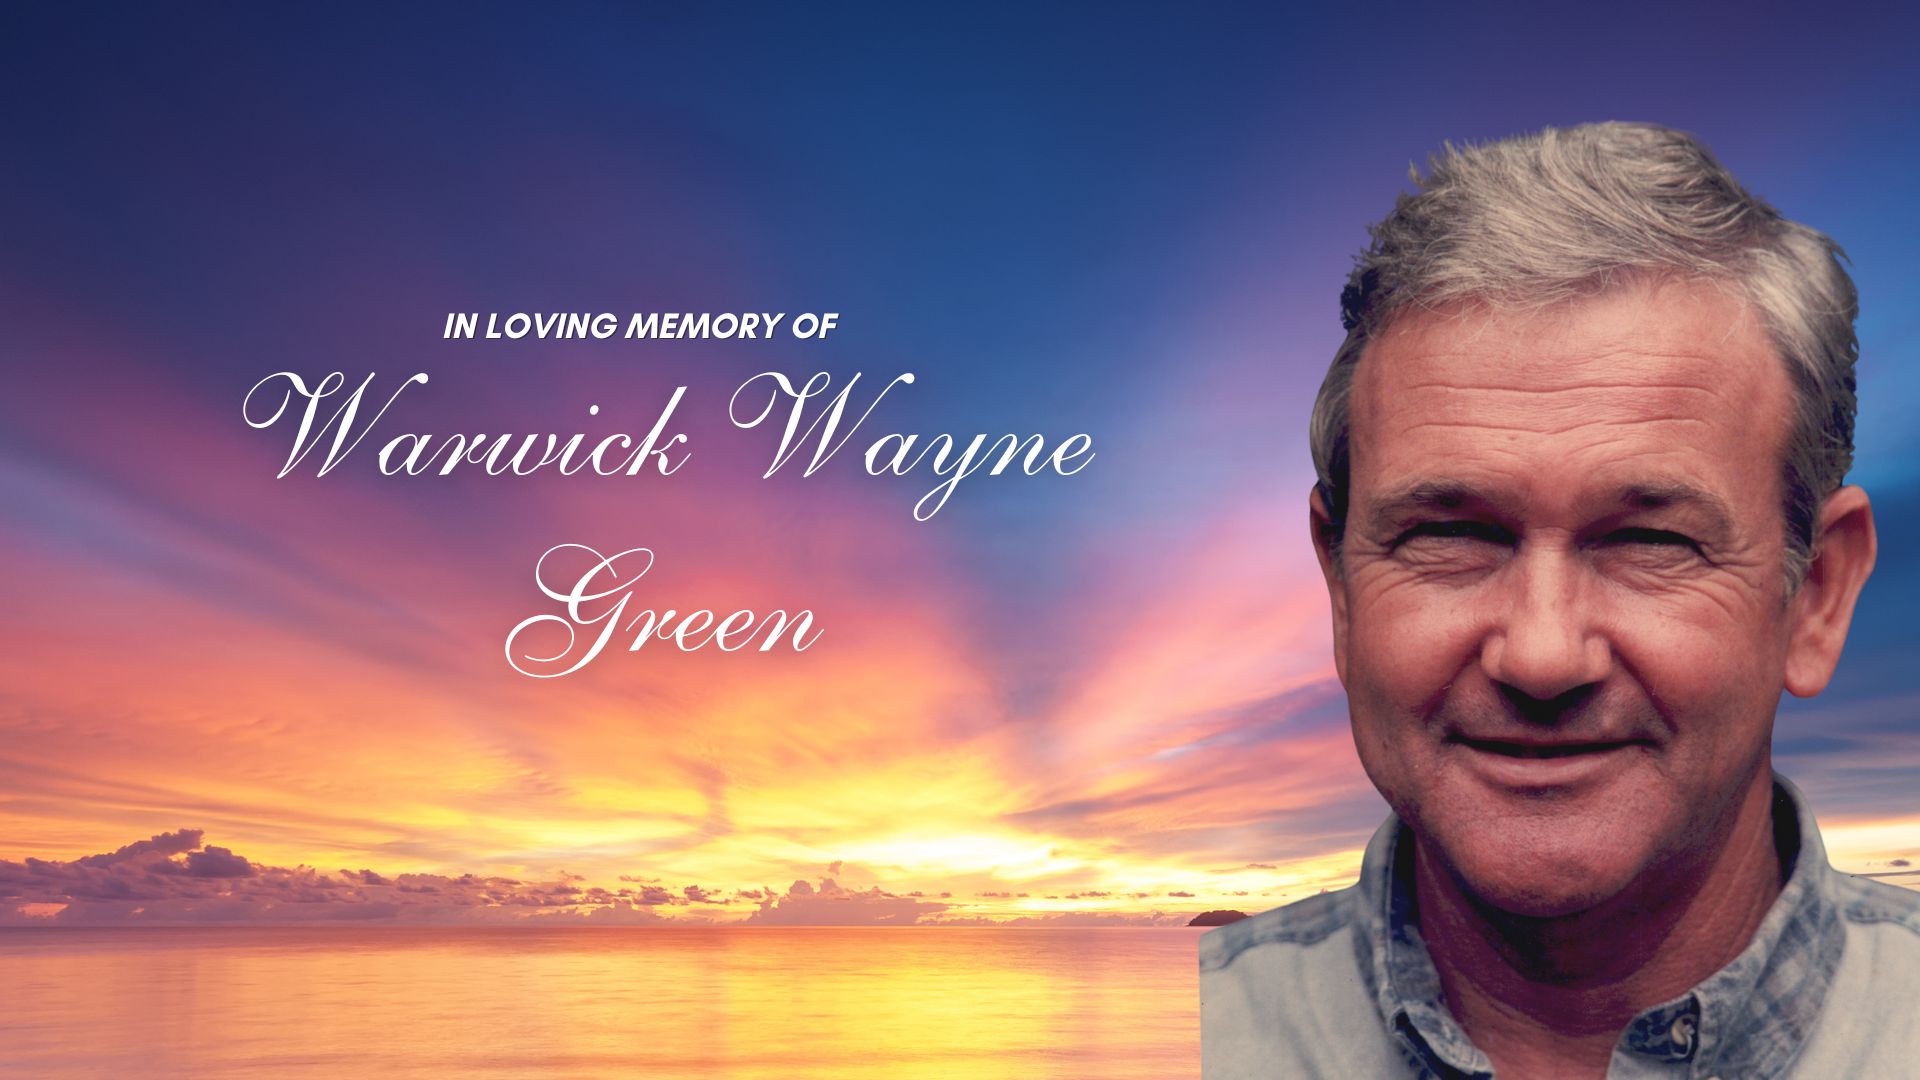 Warwick Wayne Green